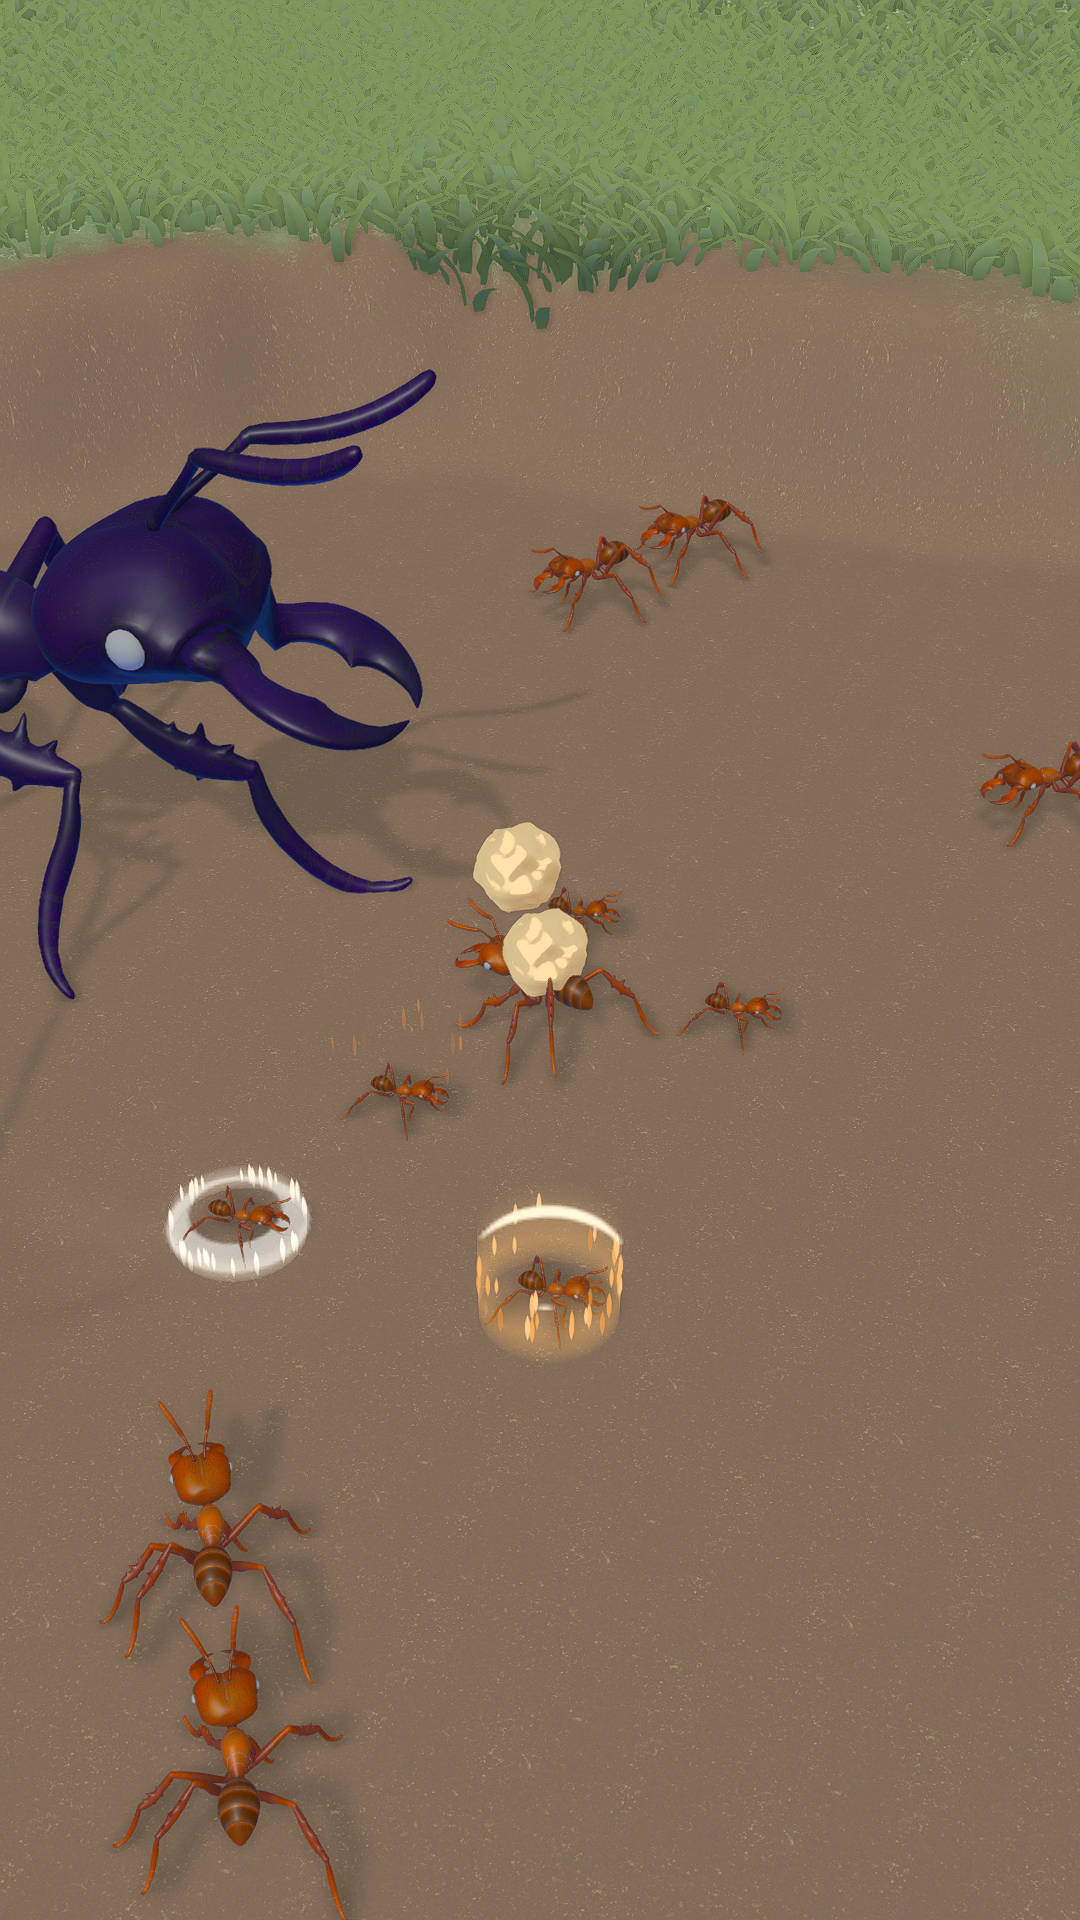 Ant Colony Adventure screenshot game